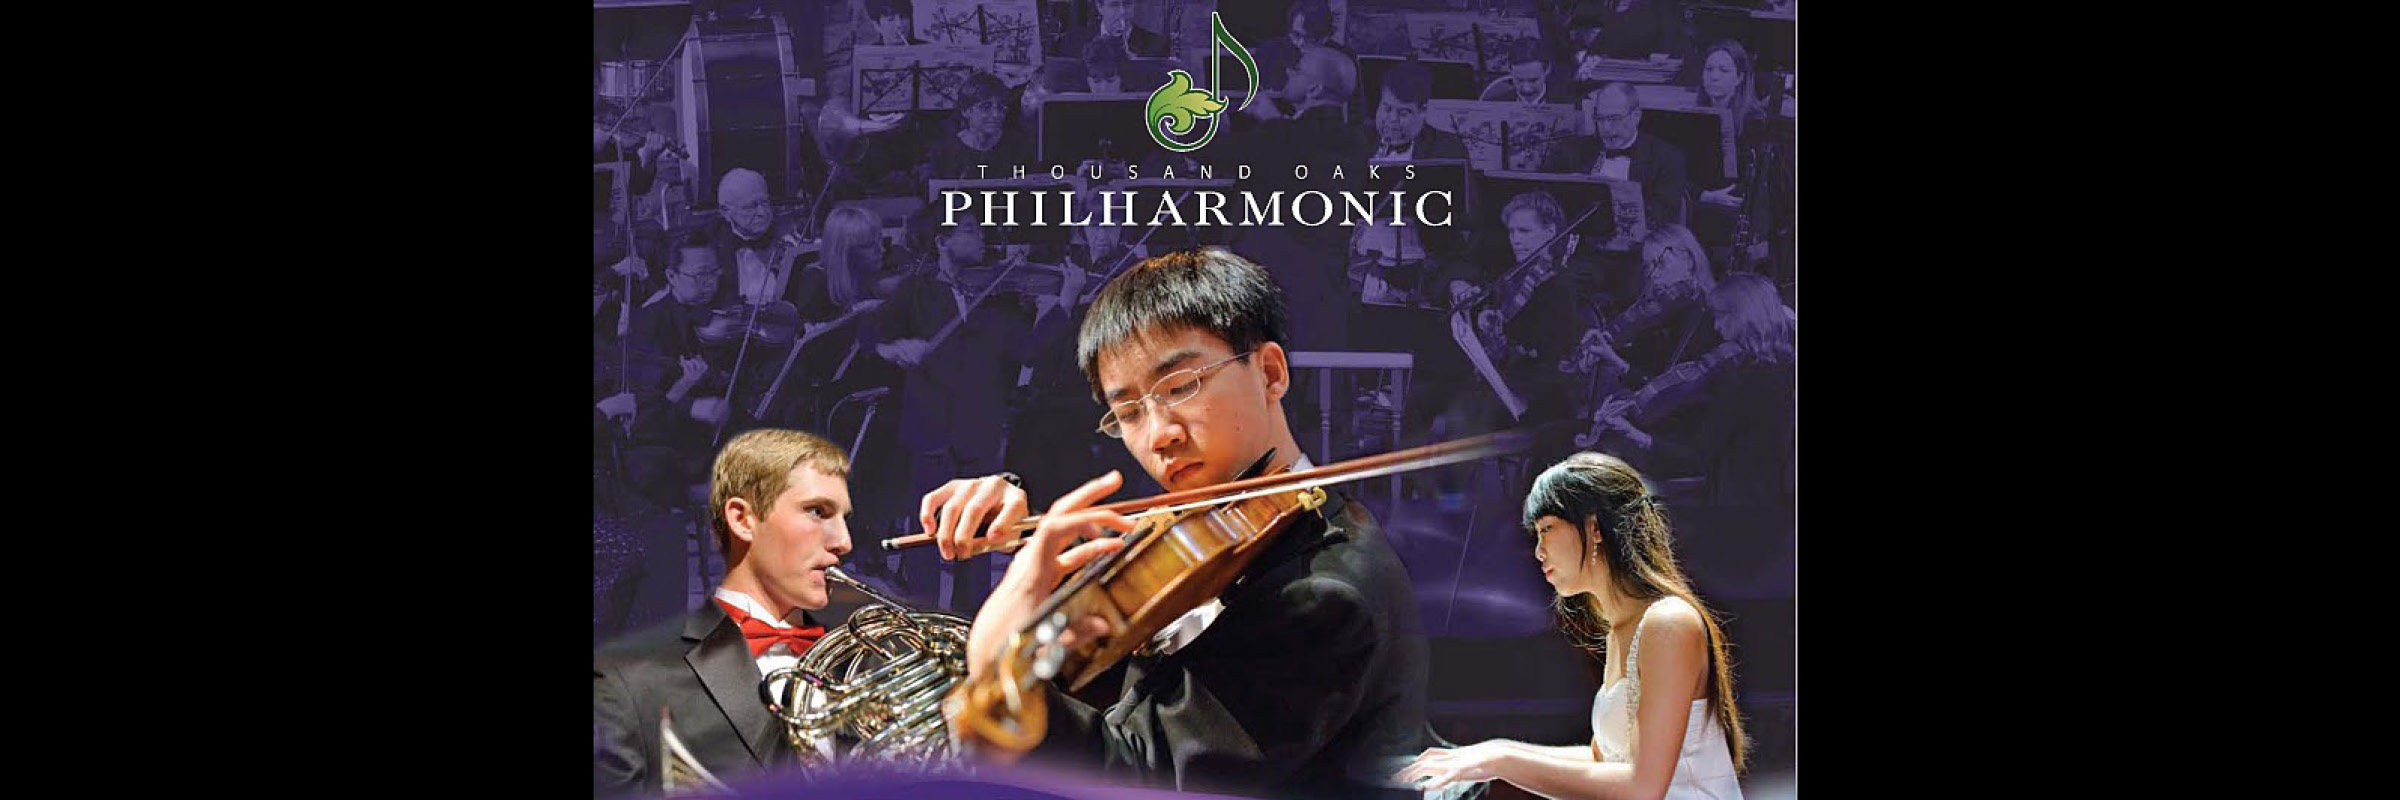 Thousand Oaks Philharmonic - Season 20, Opus 56